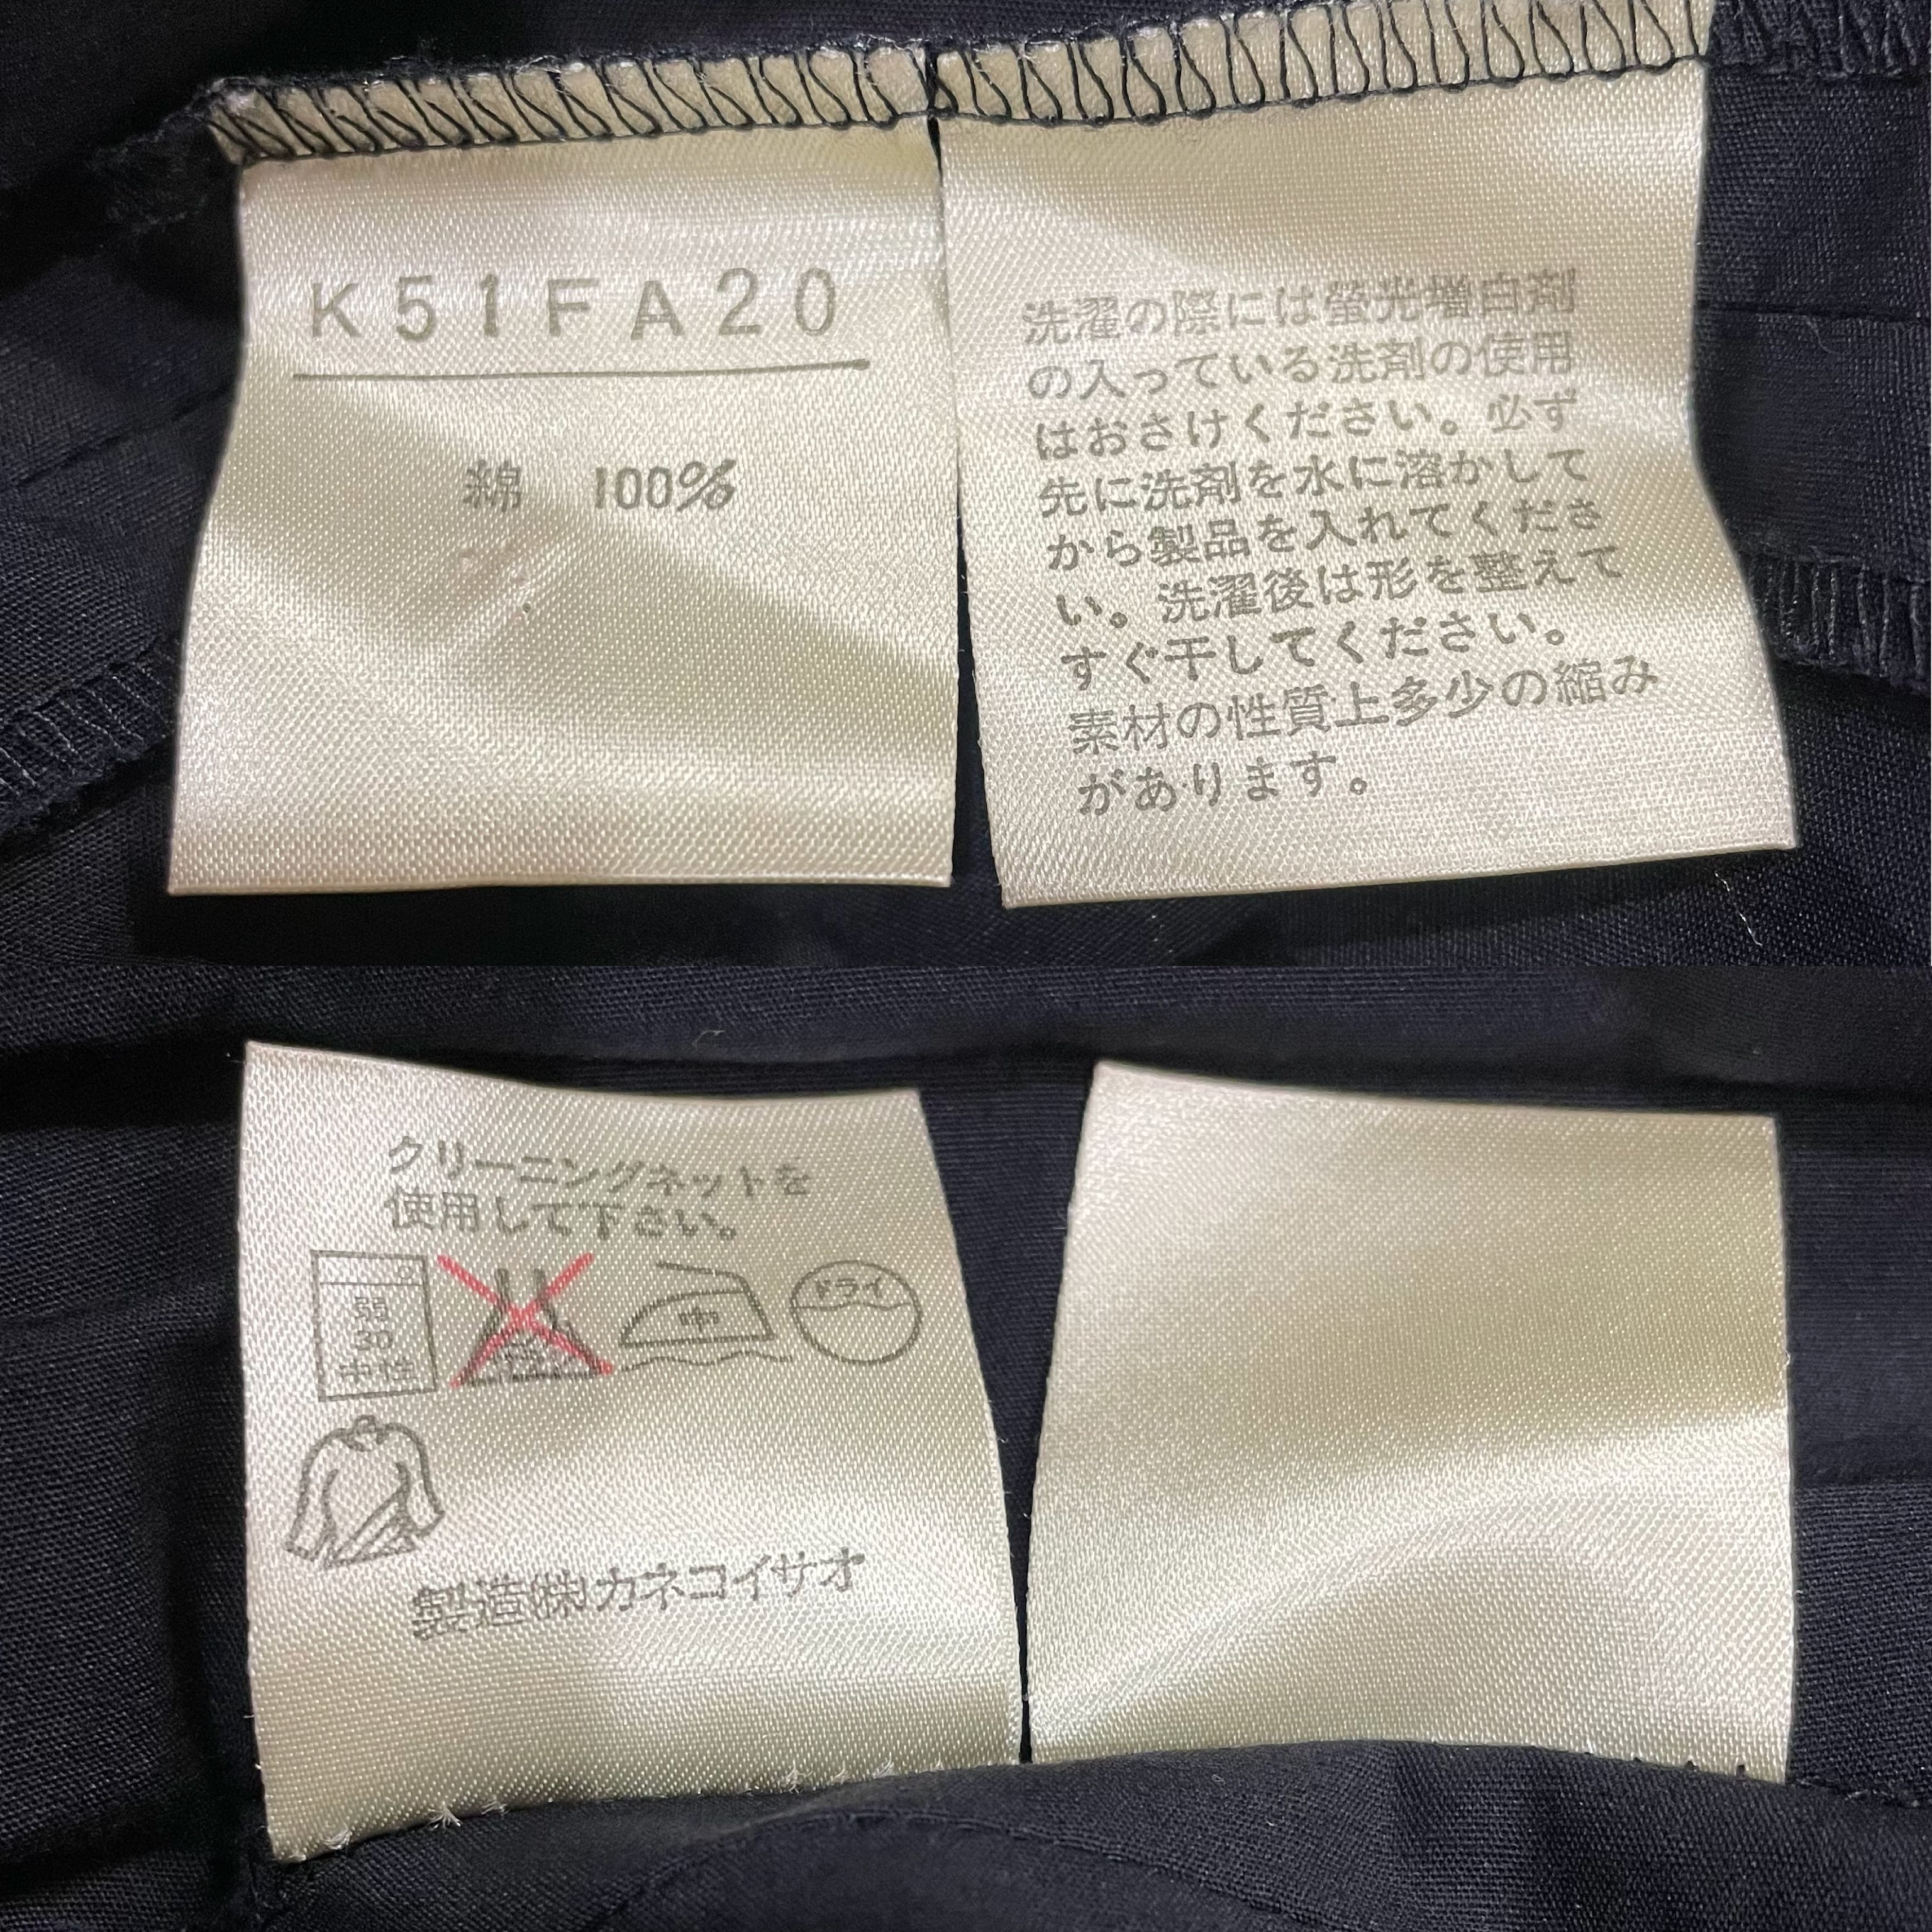 90s KANEKO ISAO white stitch ribbon design dress〈レトロ古着 ...